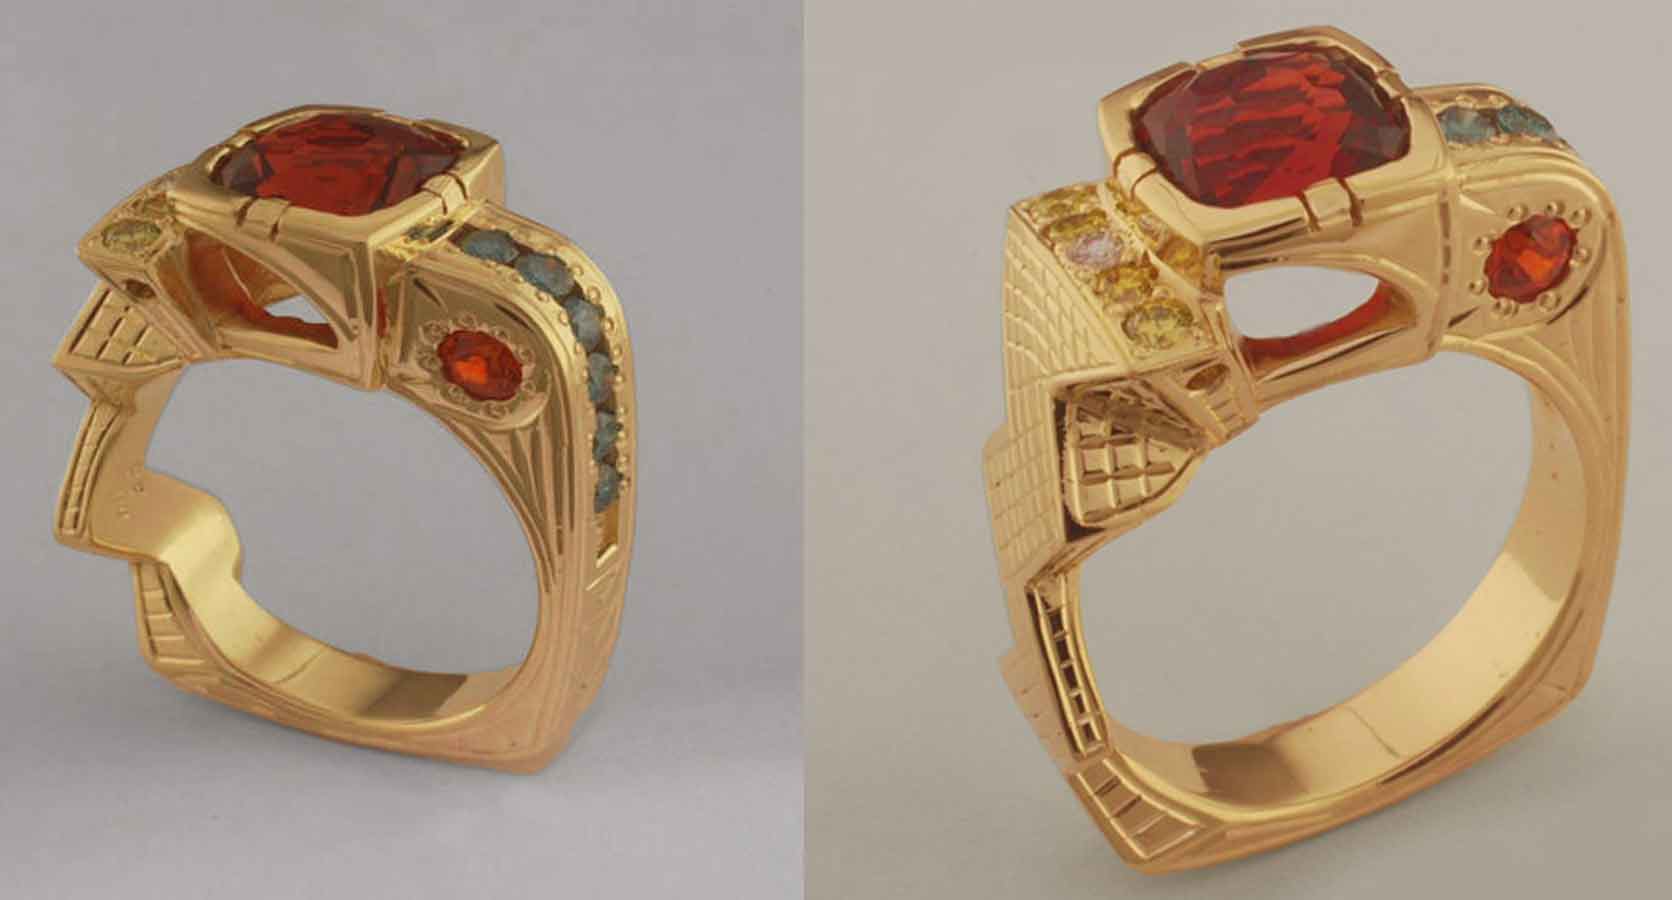 Gypsy Rose Garnet and Diamonds in a Mayan Designer Gold Ring